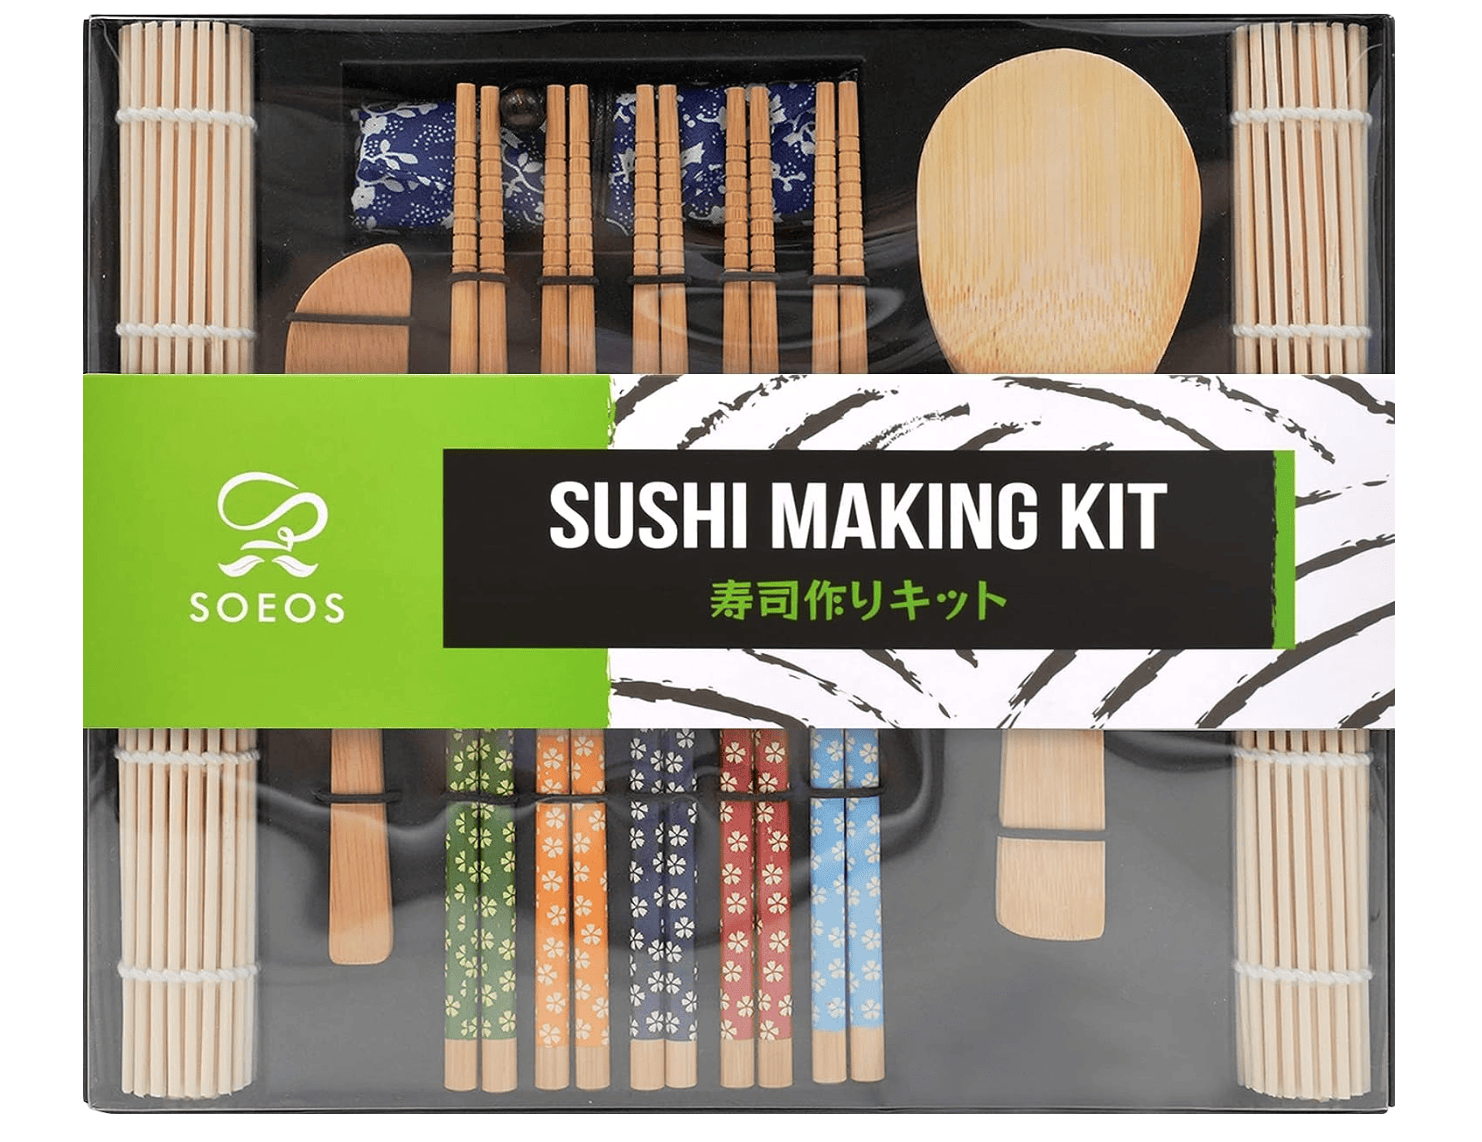 Ultimate Sushi Kit, Buy Online